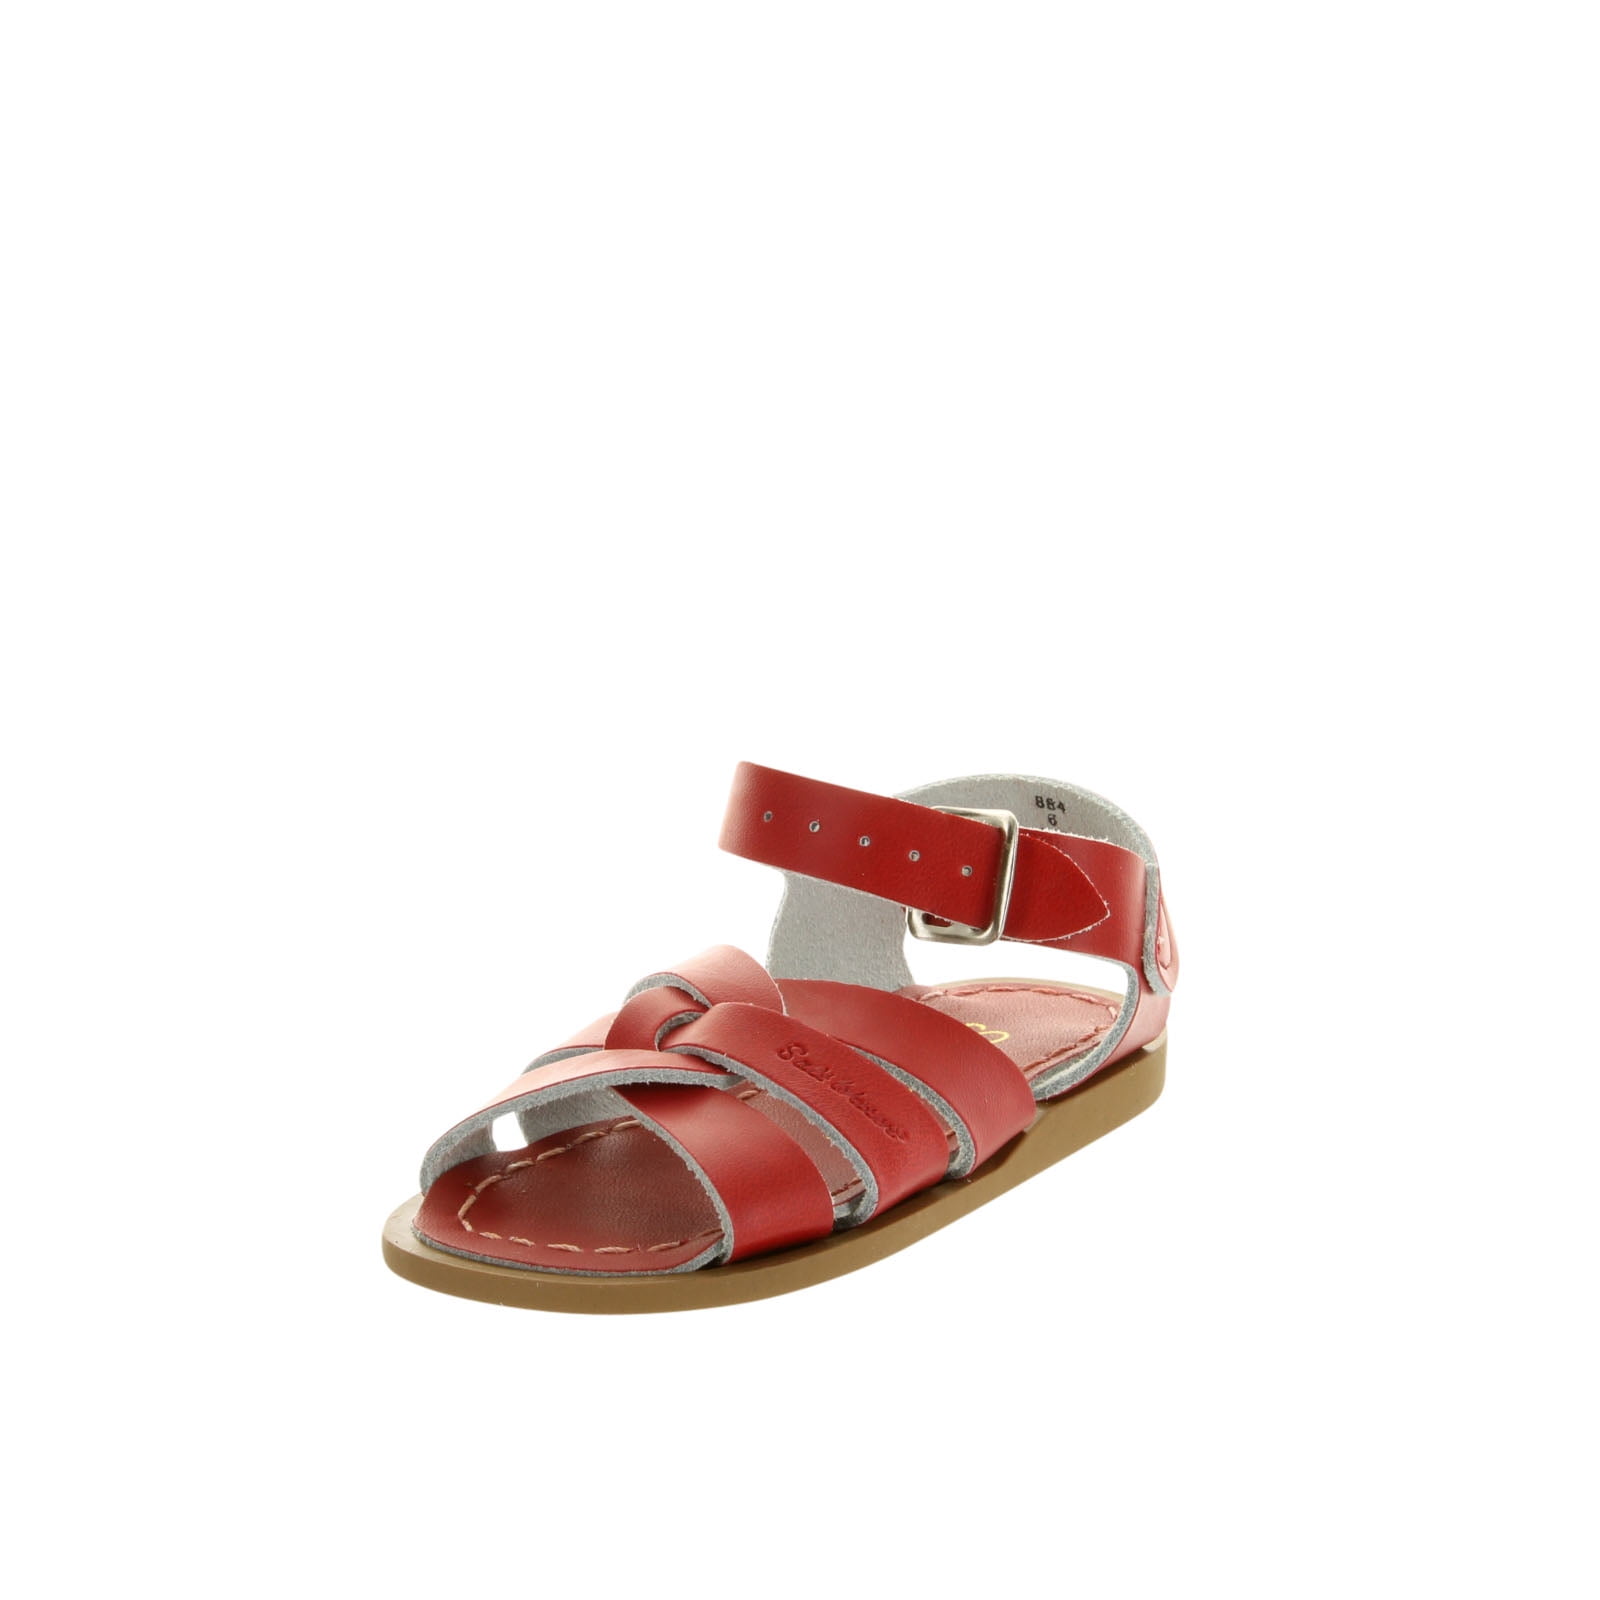 Salt-Water By Hoy Shoe The Original Sandal Sandal, Red, 4